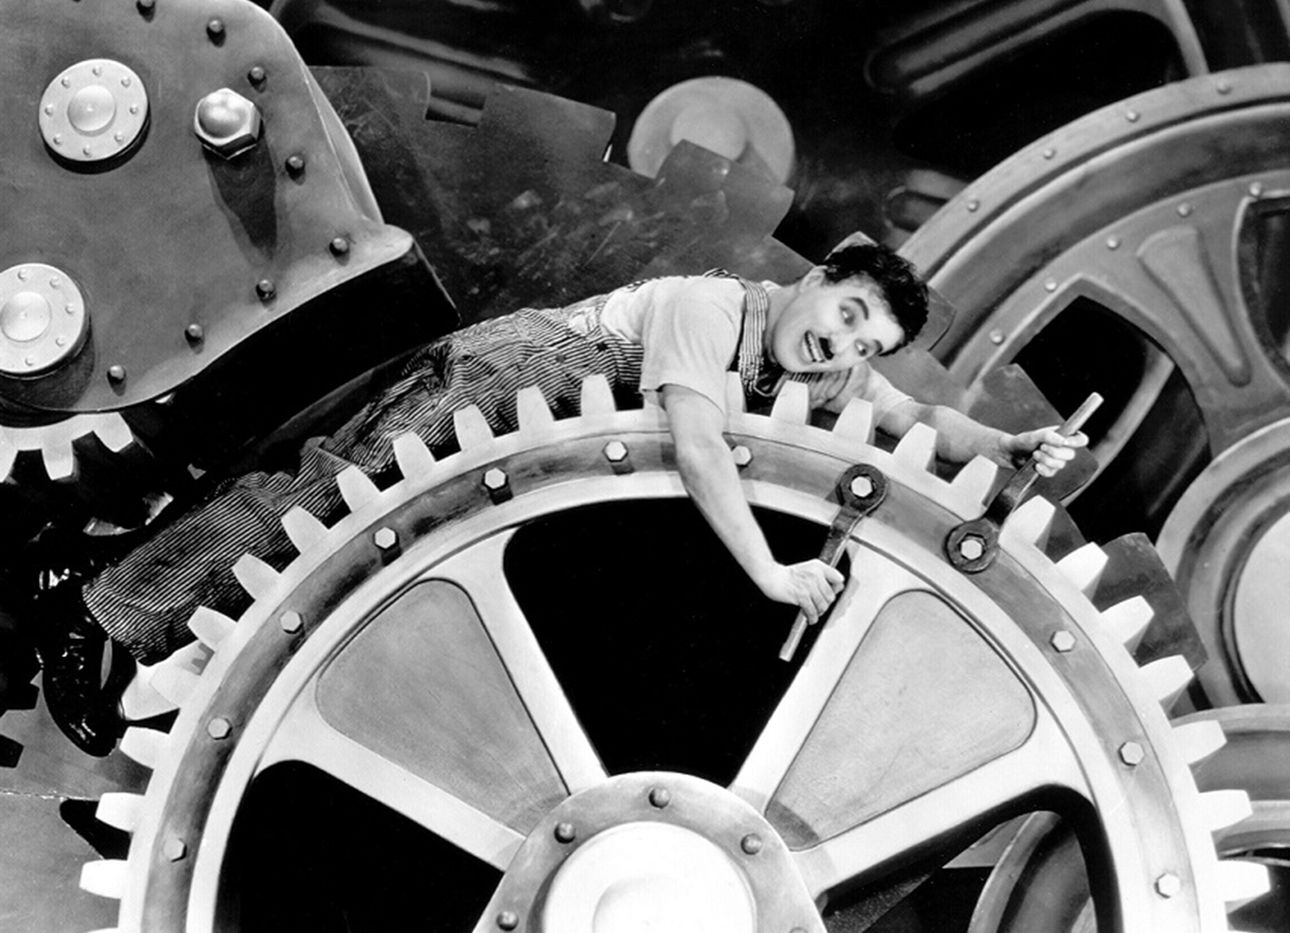 Charlie Chaplin riding the gears of a massive machine.